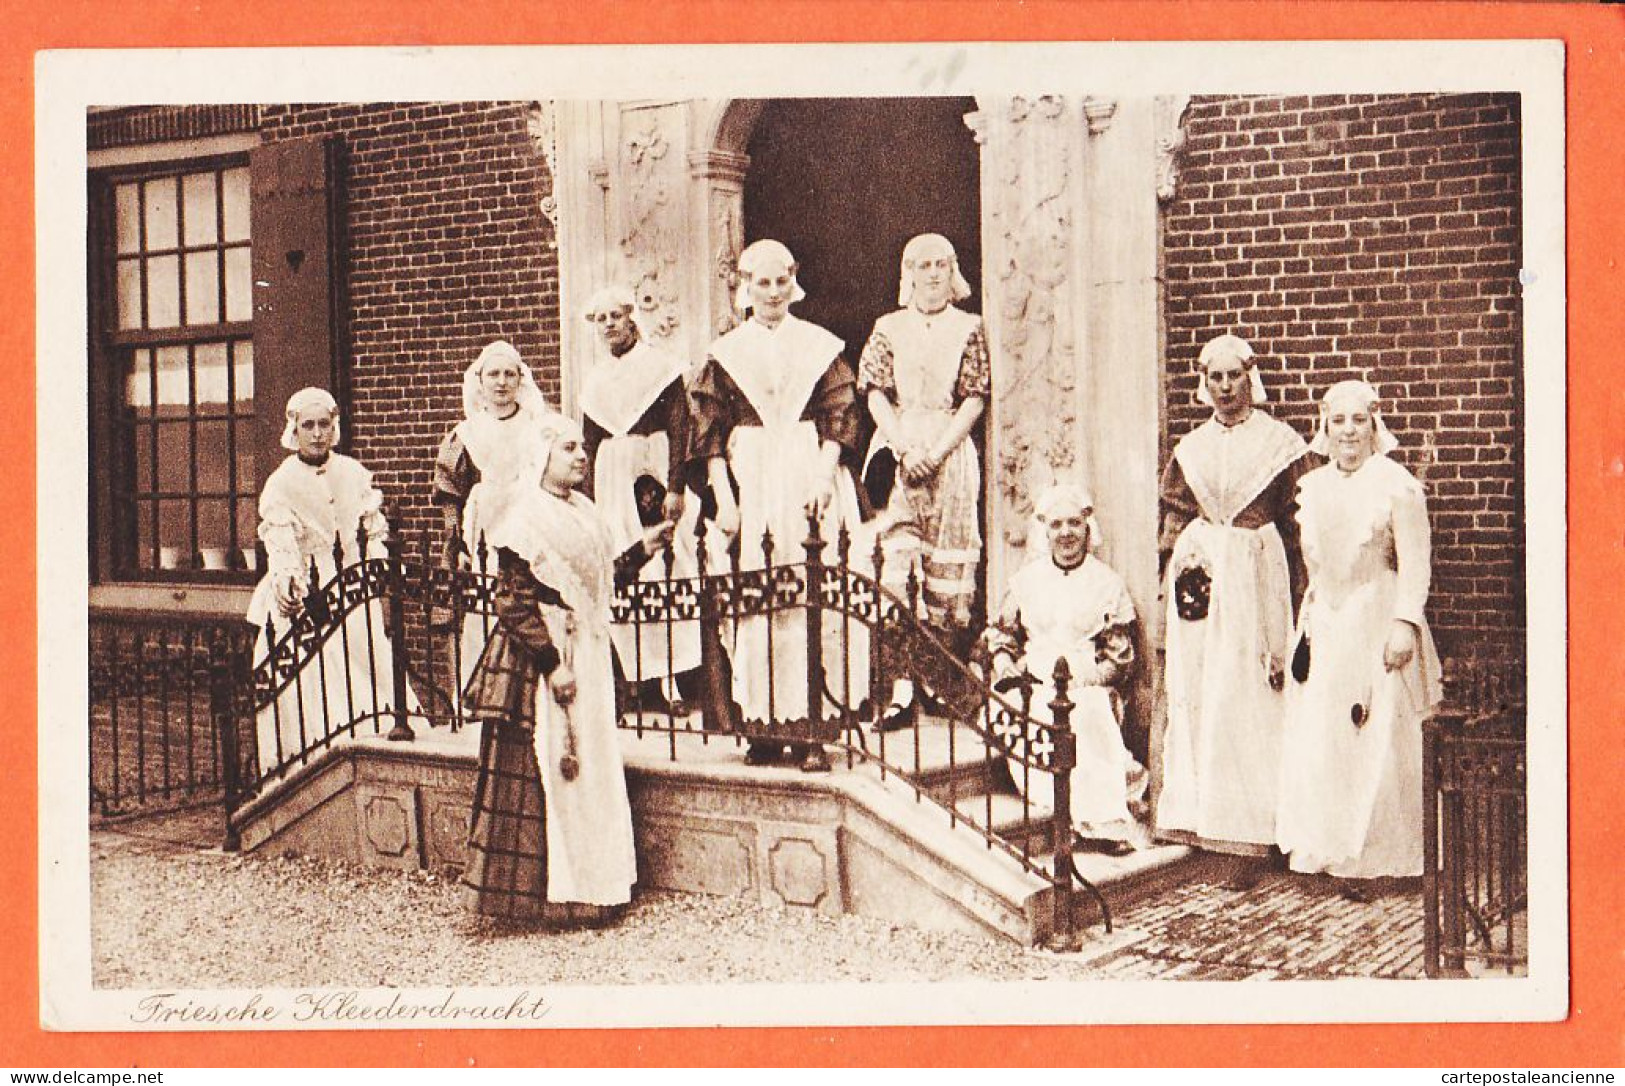 37559 / ⭐ ◉ LEEUWARDEN Friesland Friesche Kleederdracht (1) Costumes Frisons 1920s Van De VELDE 14 Nederland Pays-Bas - Leeuwarden